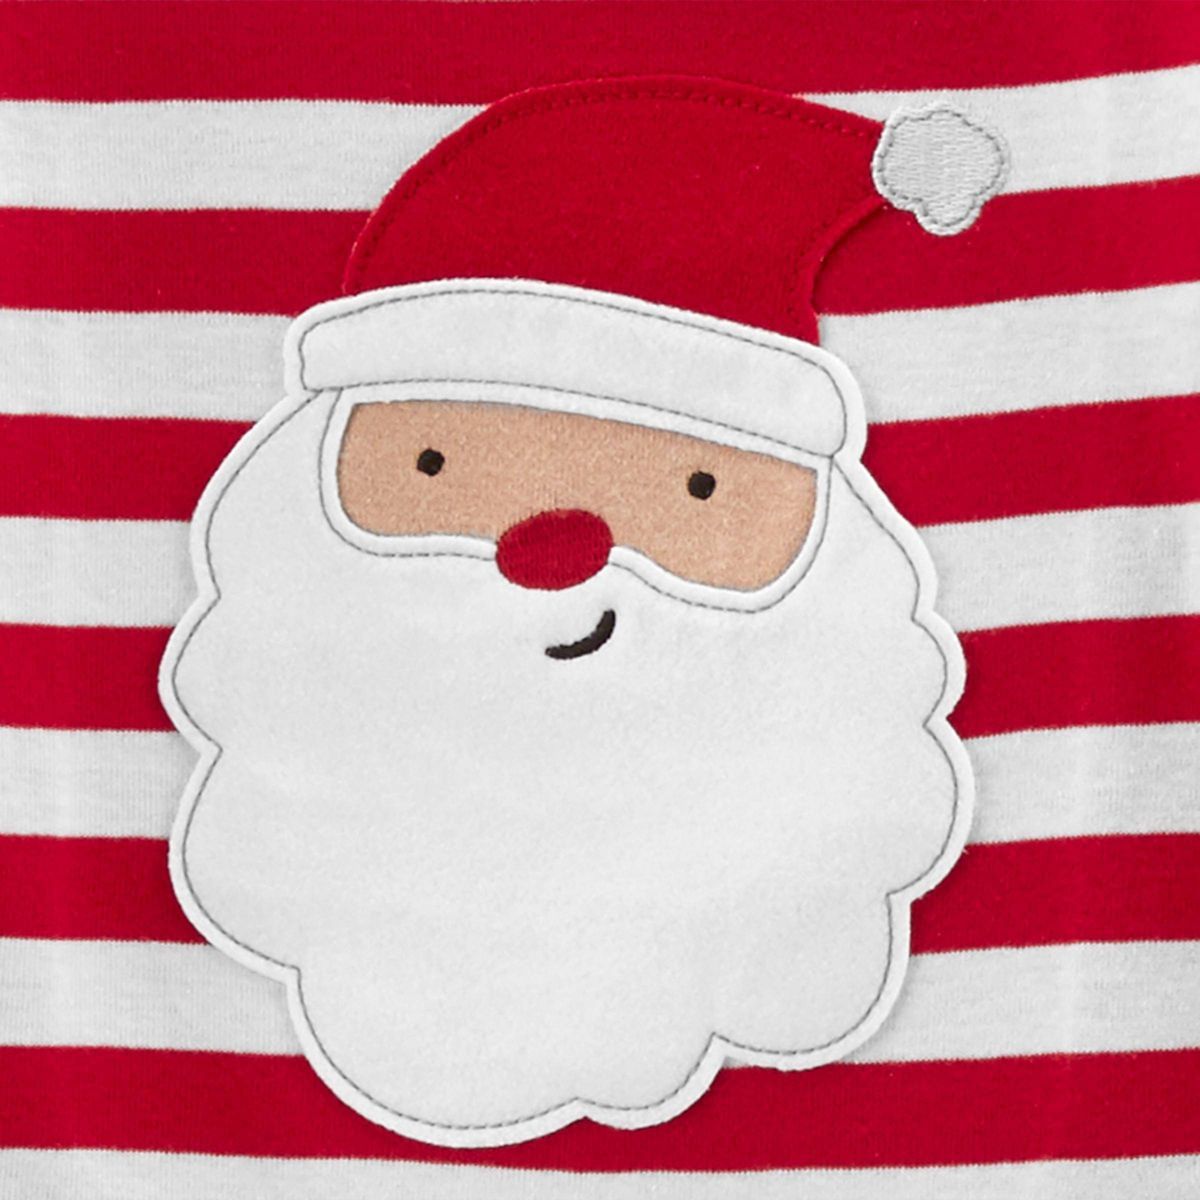 Carter's Just One You® Toddler 4pc Striped Santa Pajama Set | Target